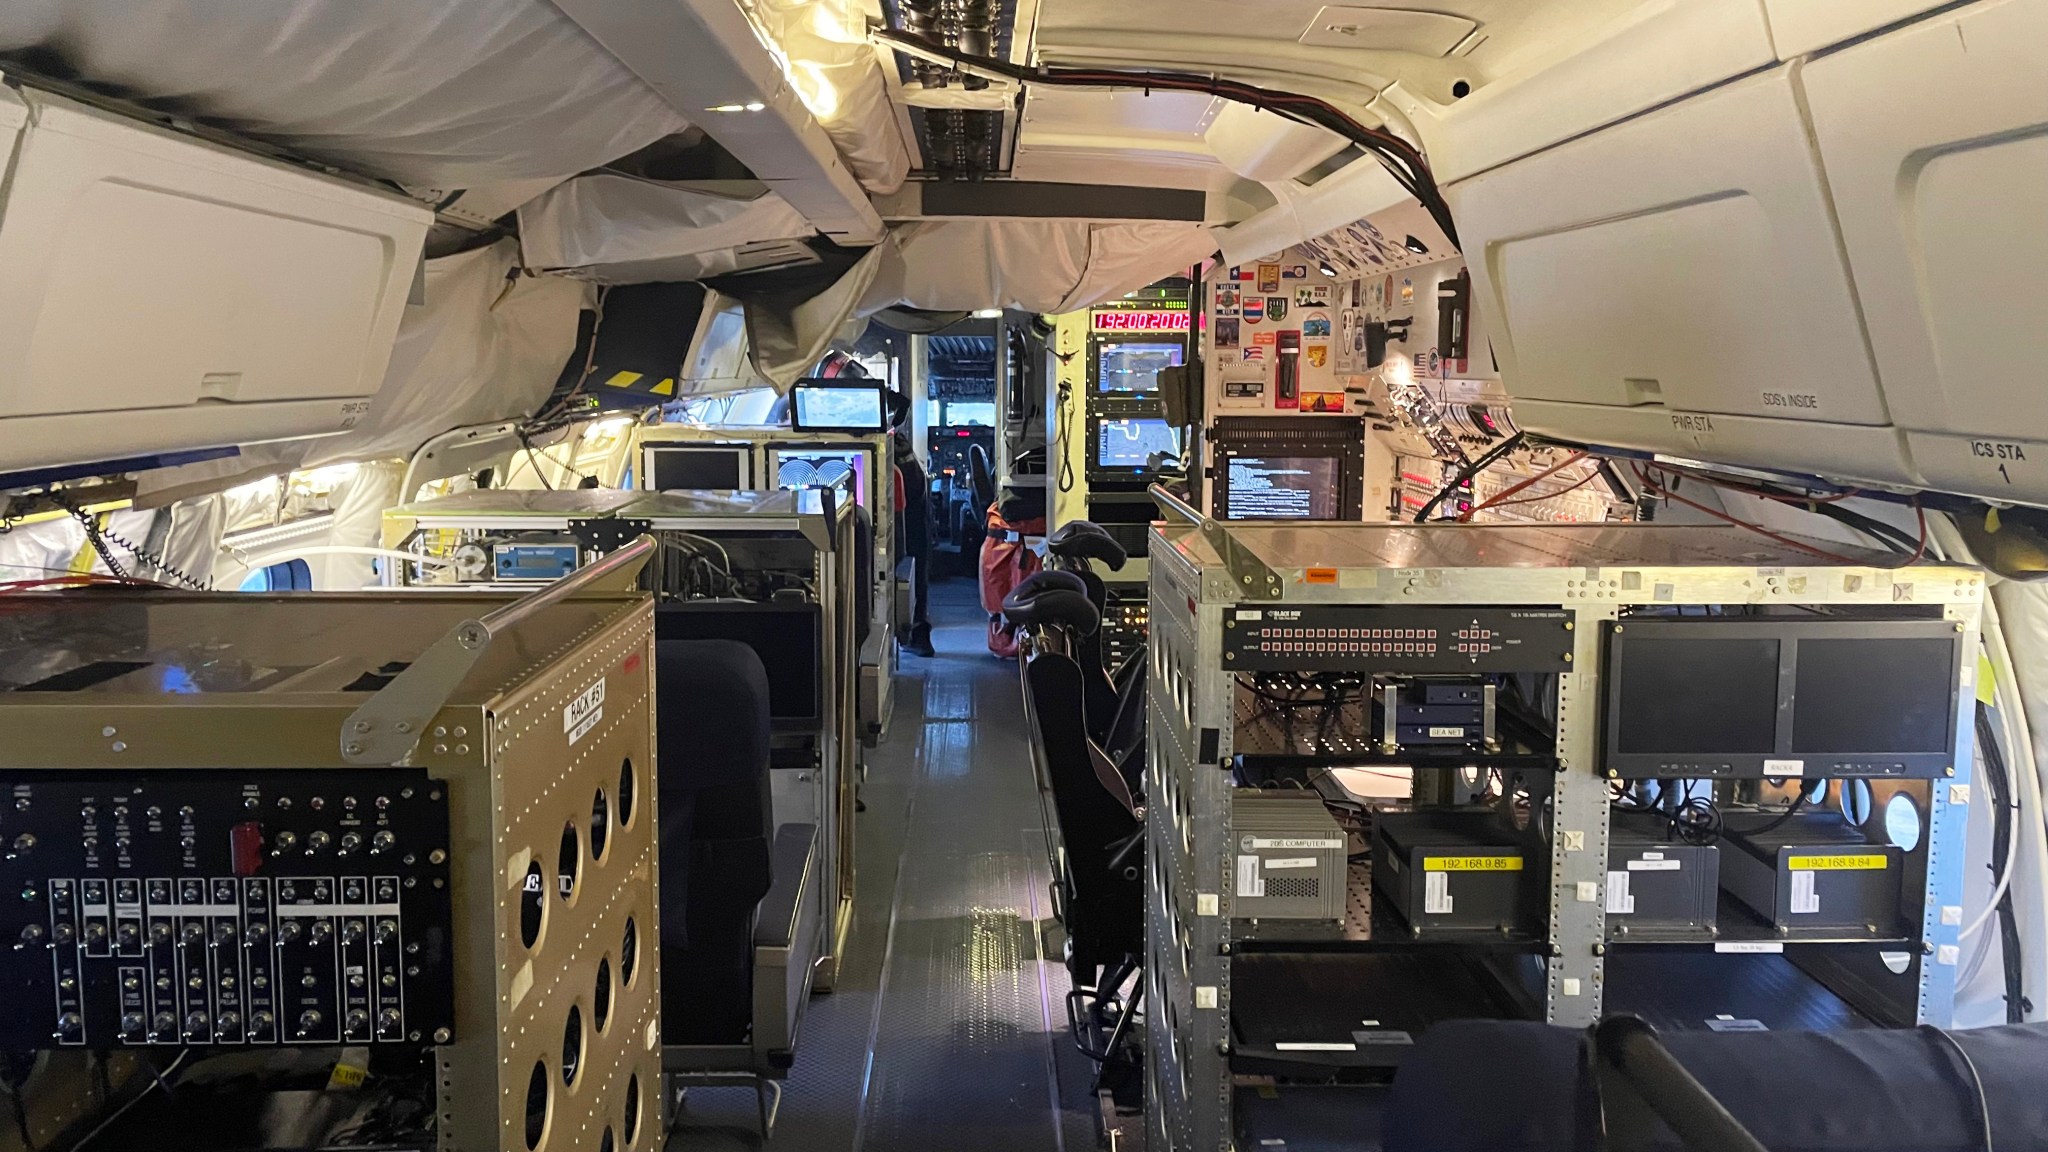 A look inside NASA’s DC-8 aircraft.